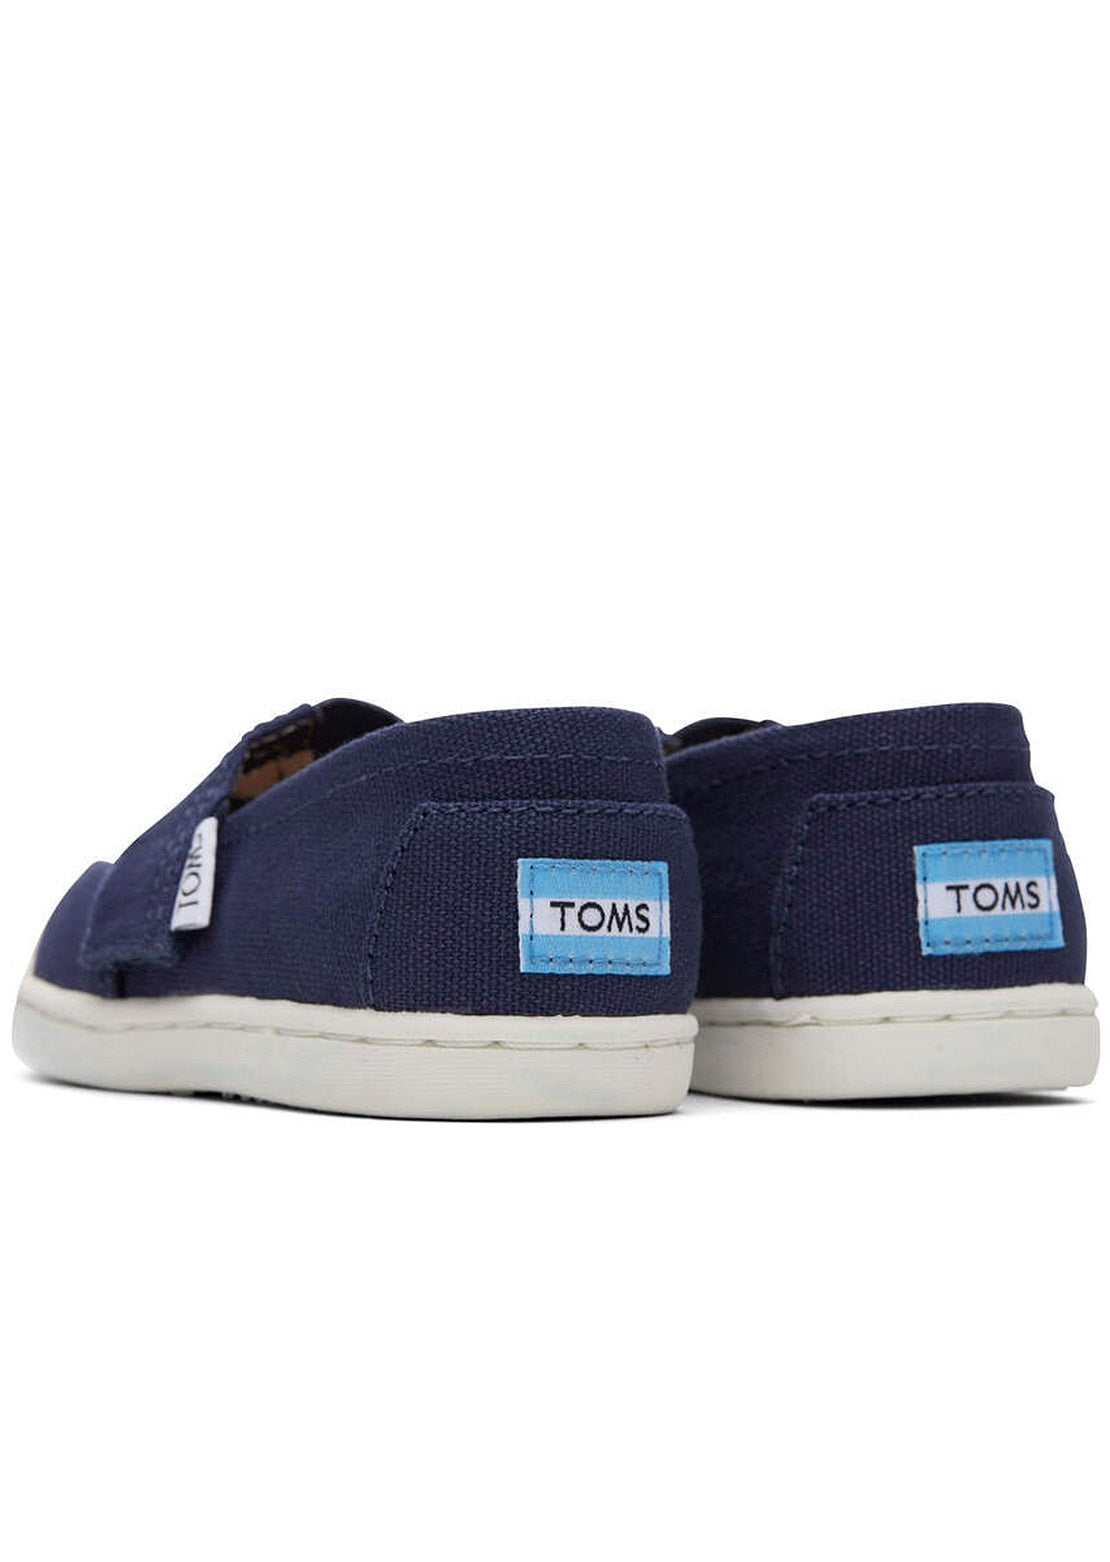 Toms Junior Alpargata Casual Shoes Navy